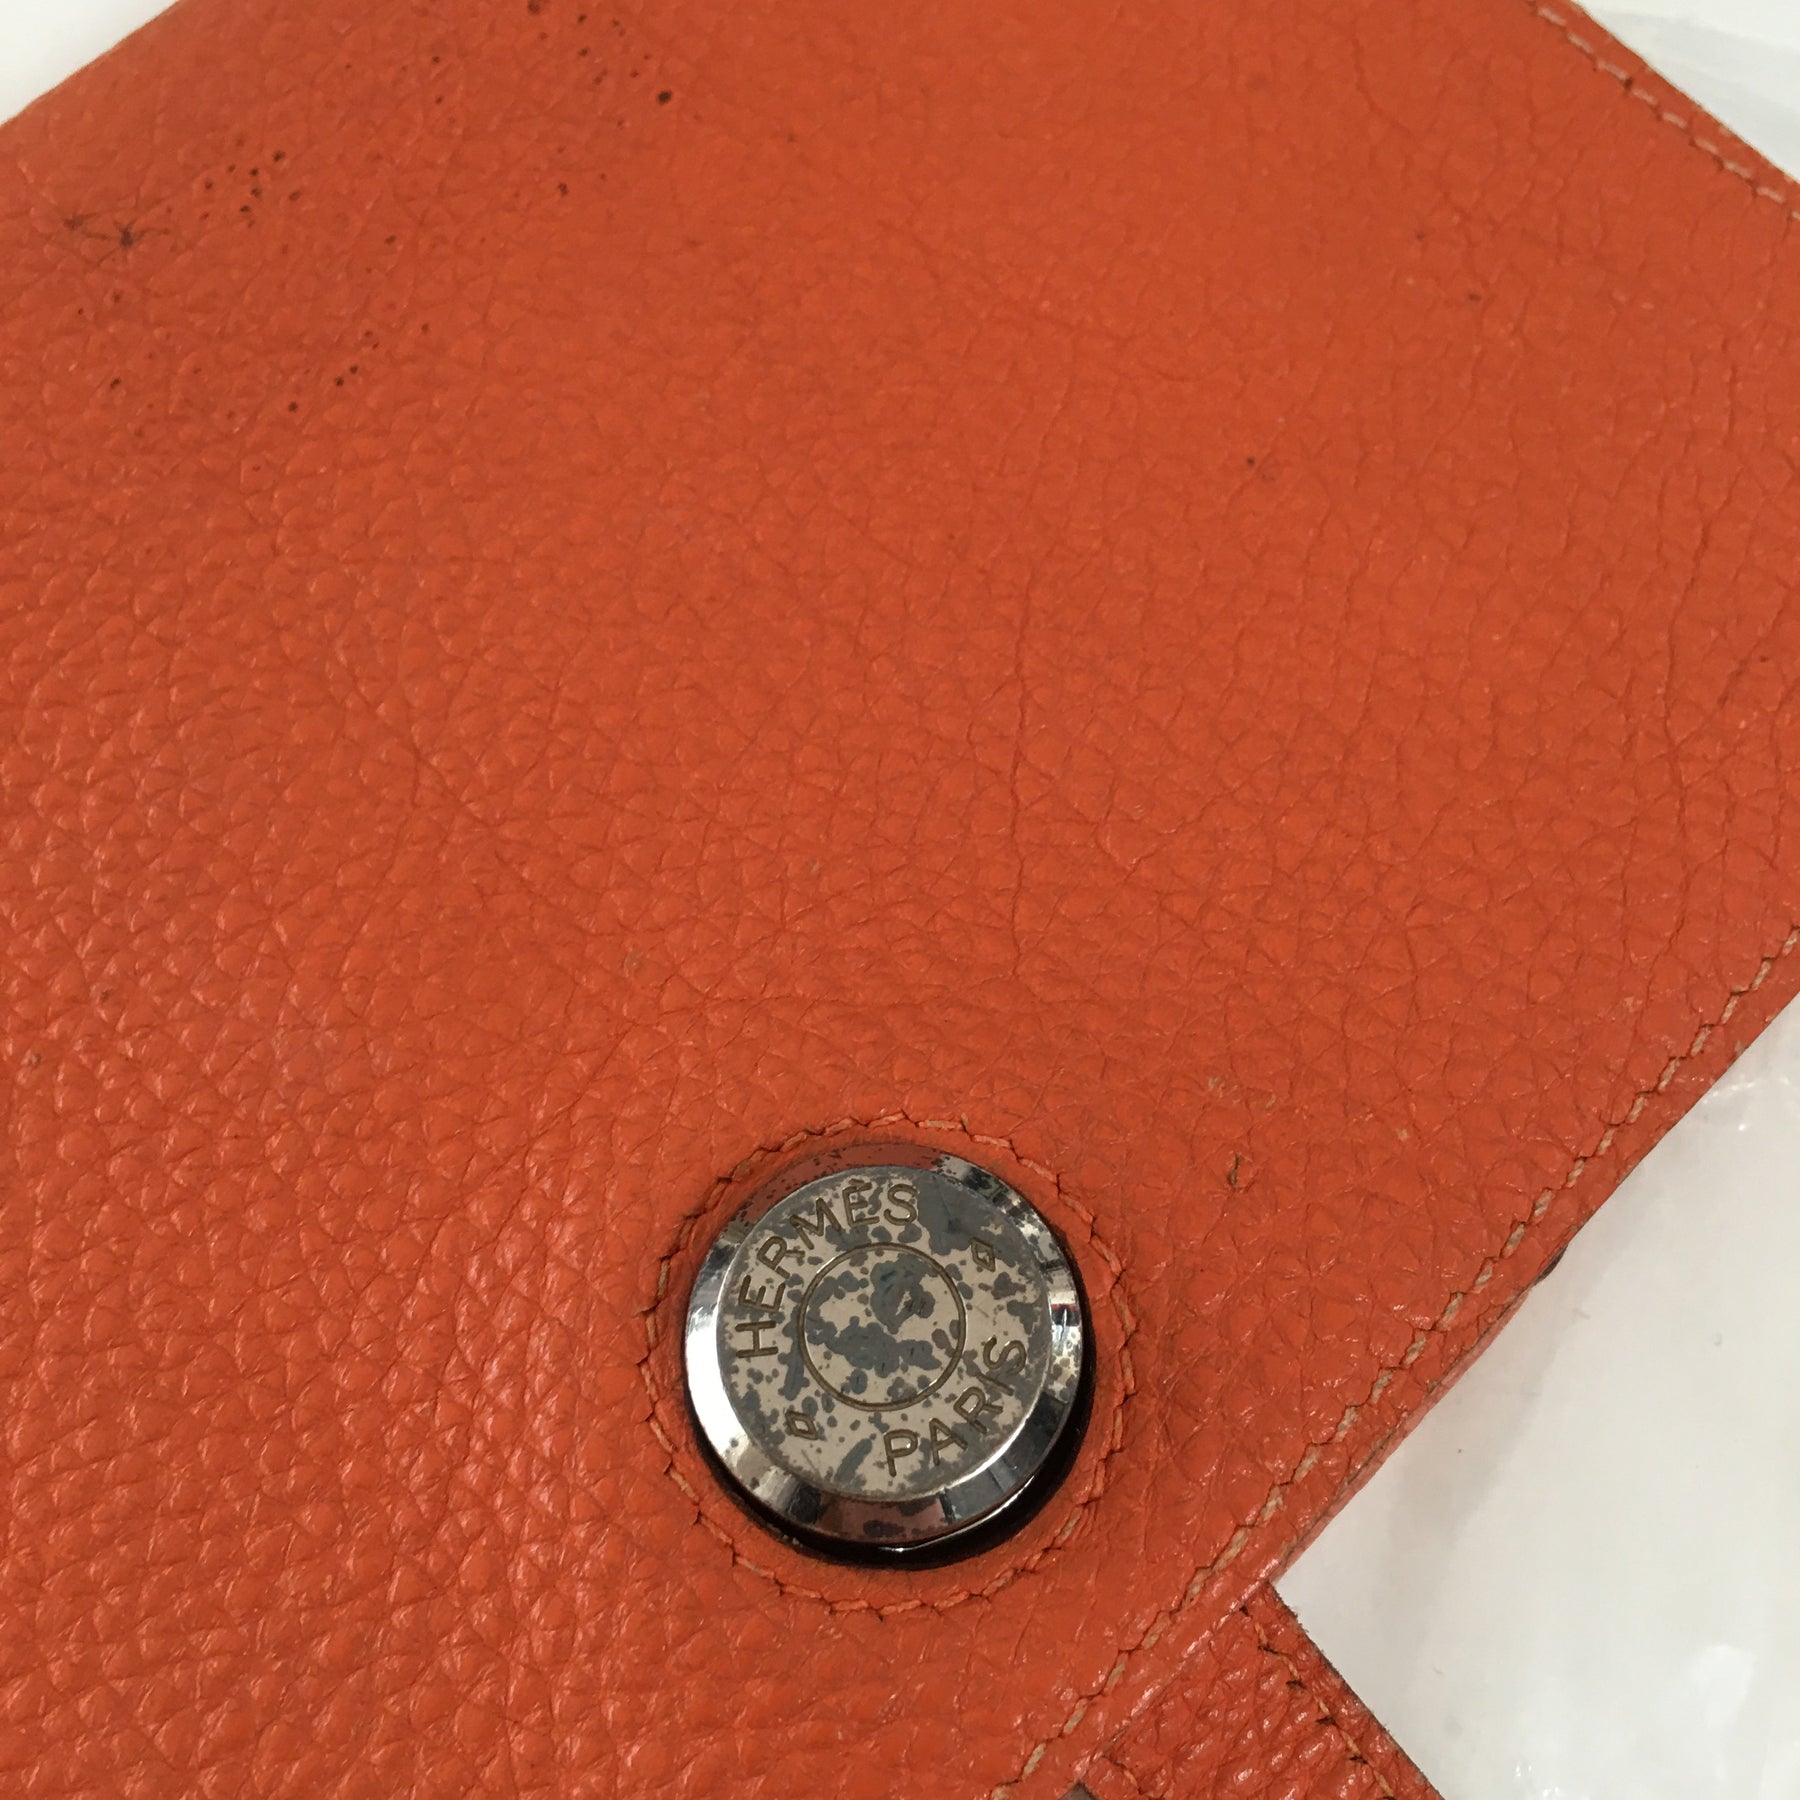 Hermès Dogon Card holder in Orange Leather – Fancy Lux